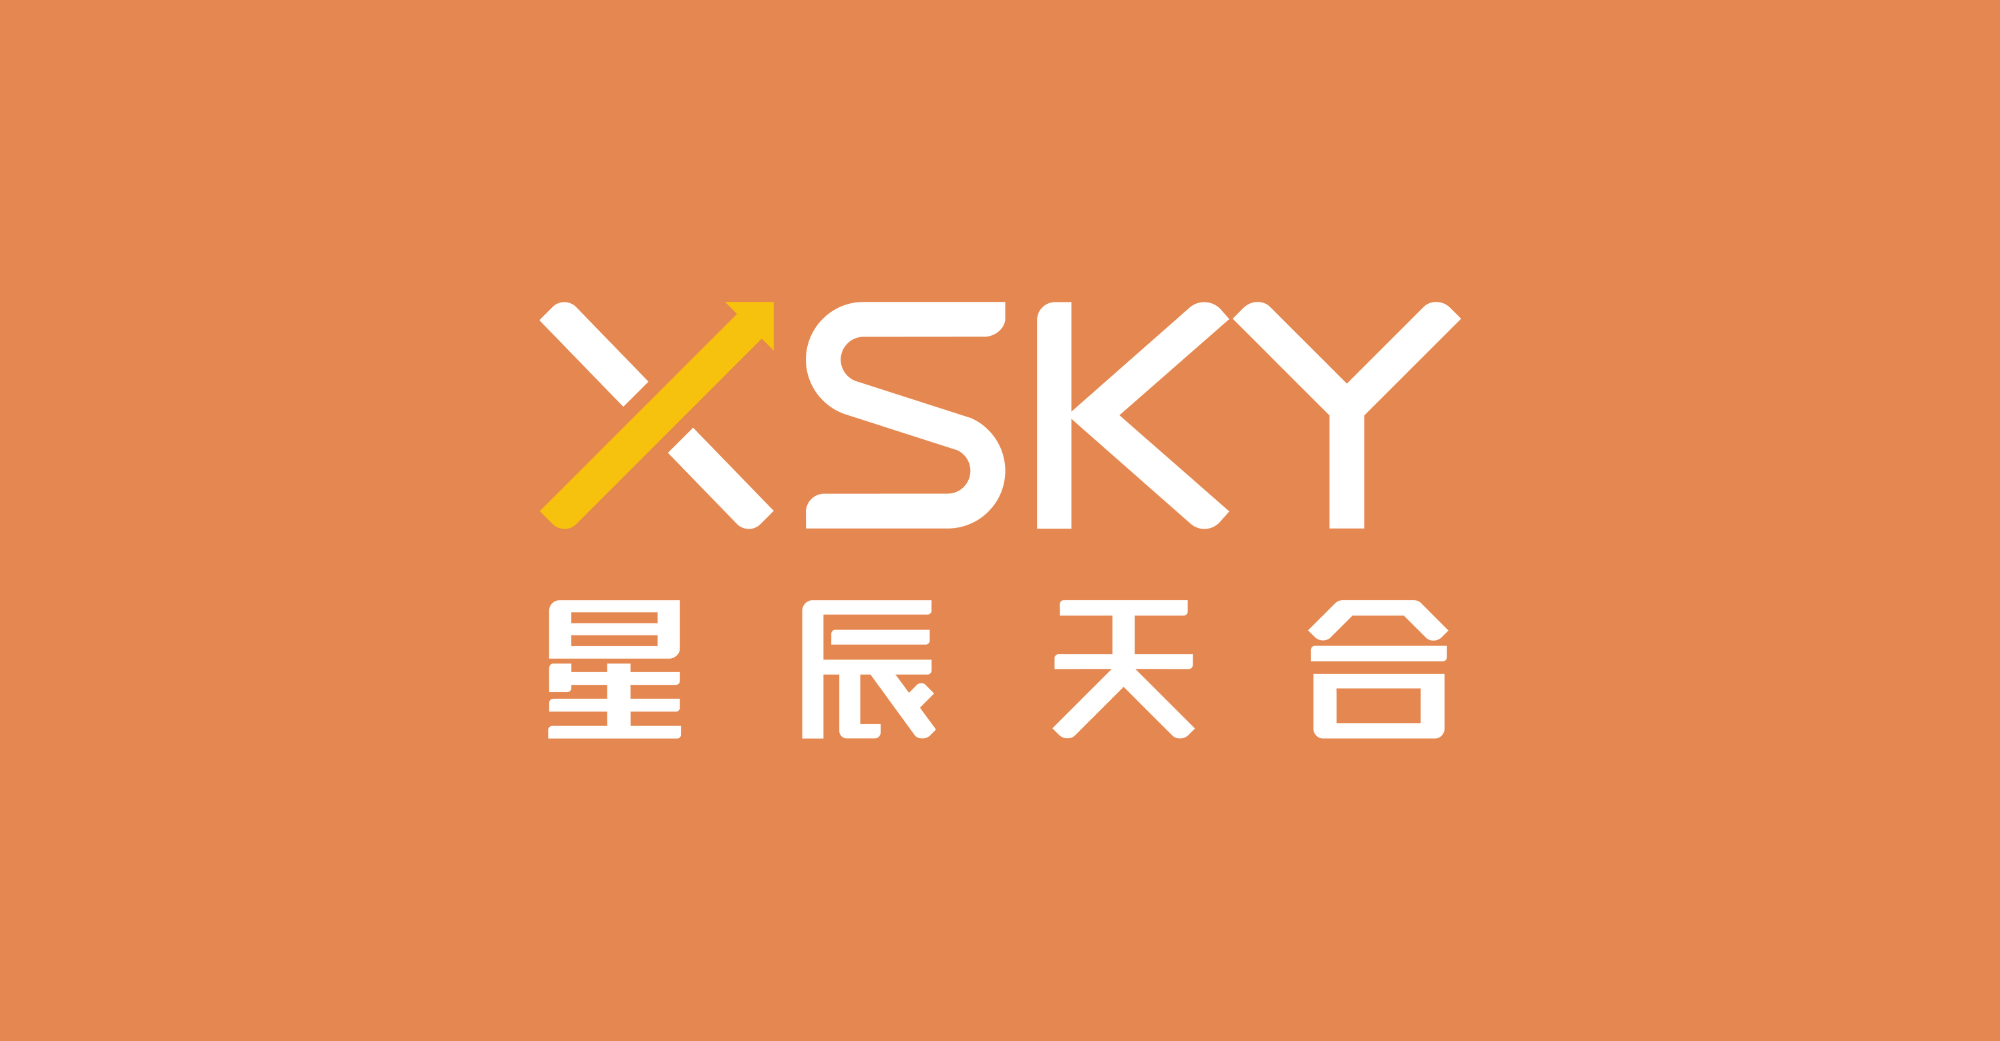 XSky অর্থায়ন $62.8 মিলিয়ন এবং বিনিয়োগ উৎস মূলধন লাভ করেছে